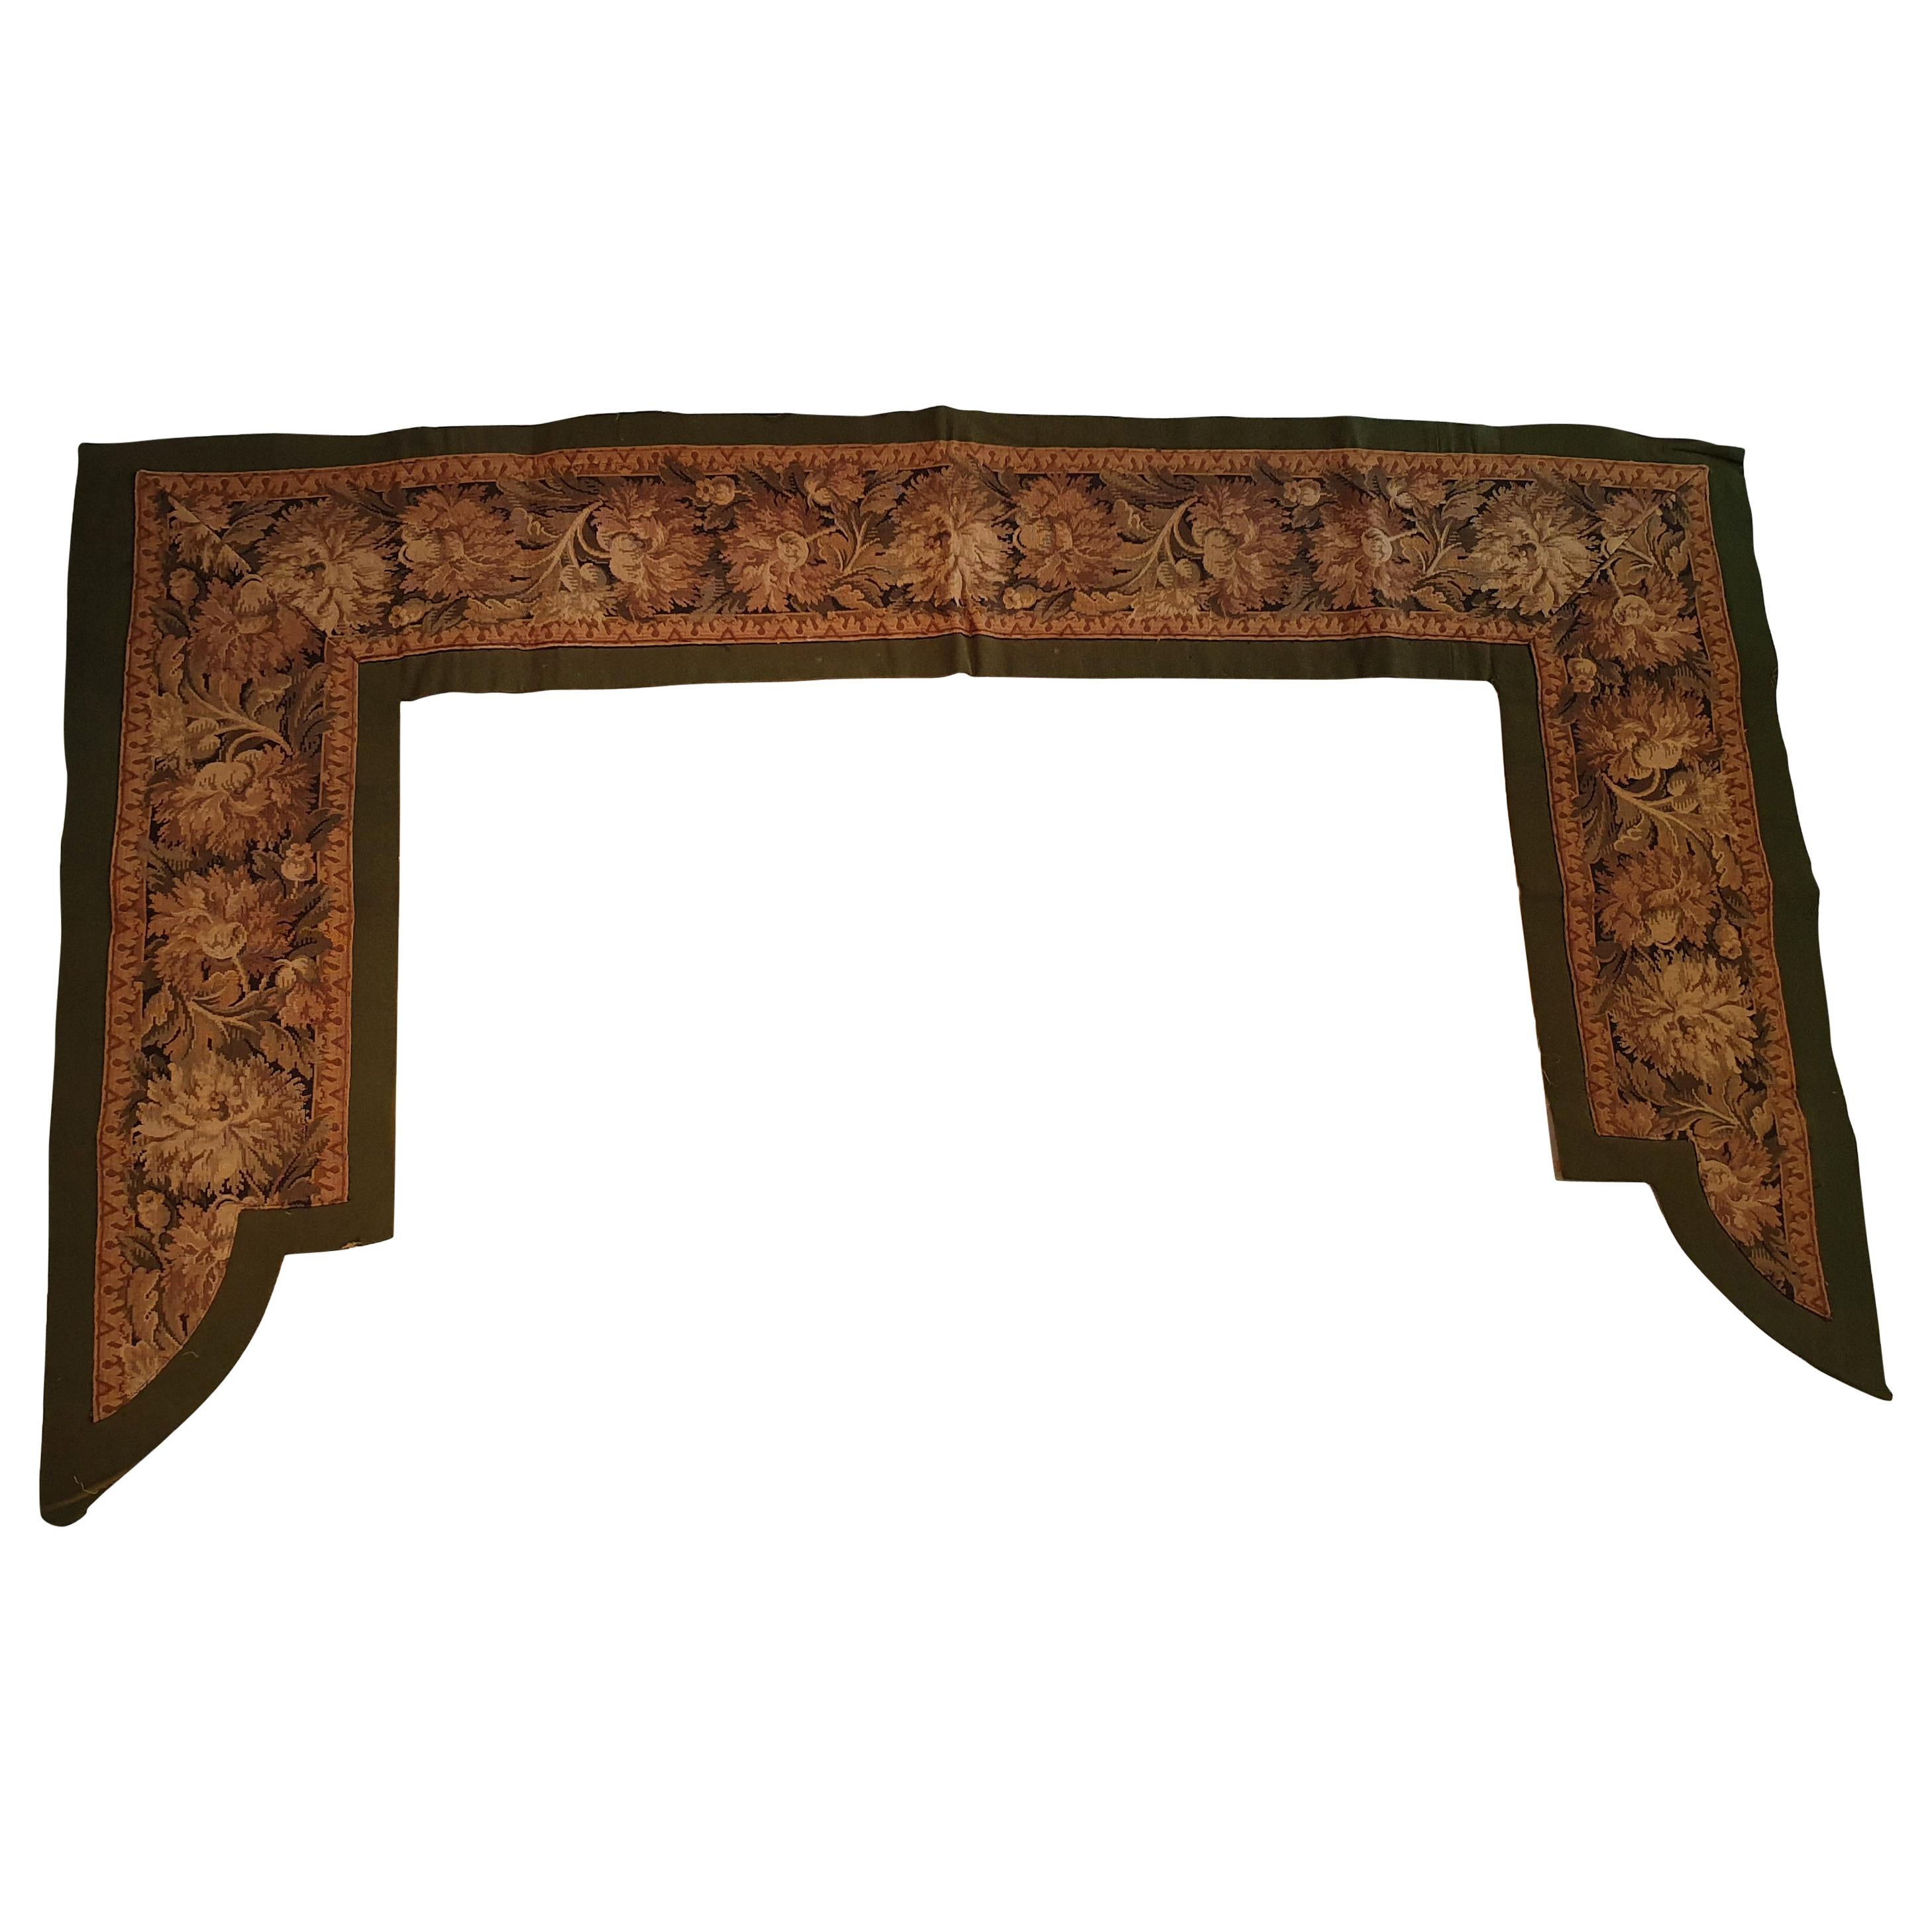 826 - 19th Century Tapestry Door For Sale